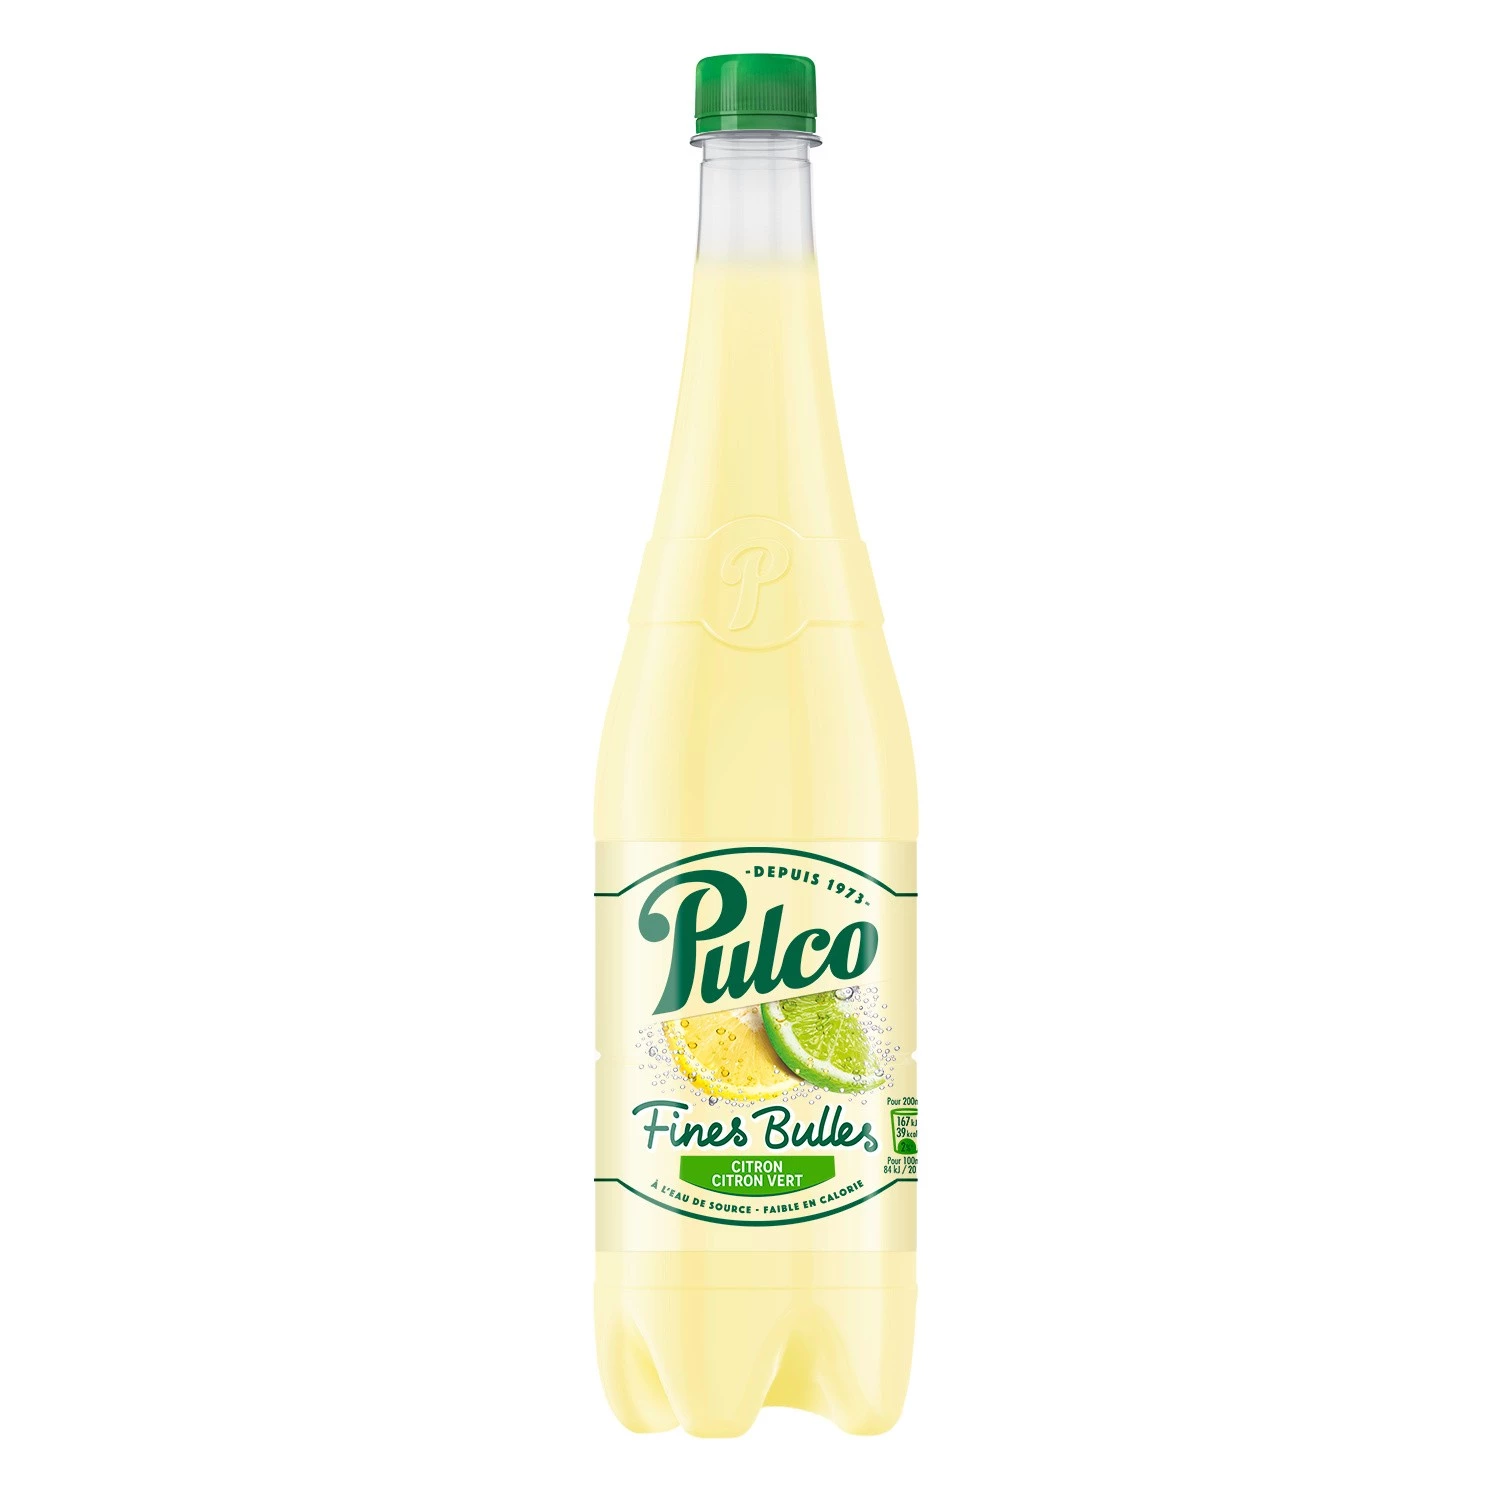 Soda cidra/cidra vert 1L - PULCO